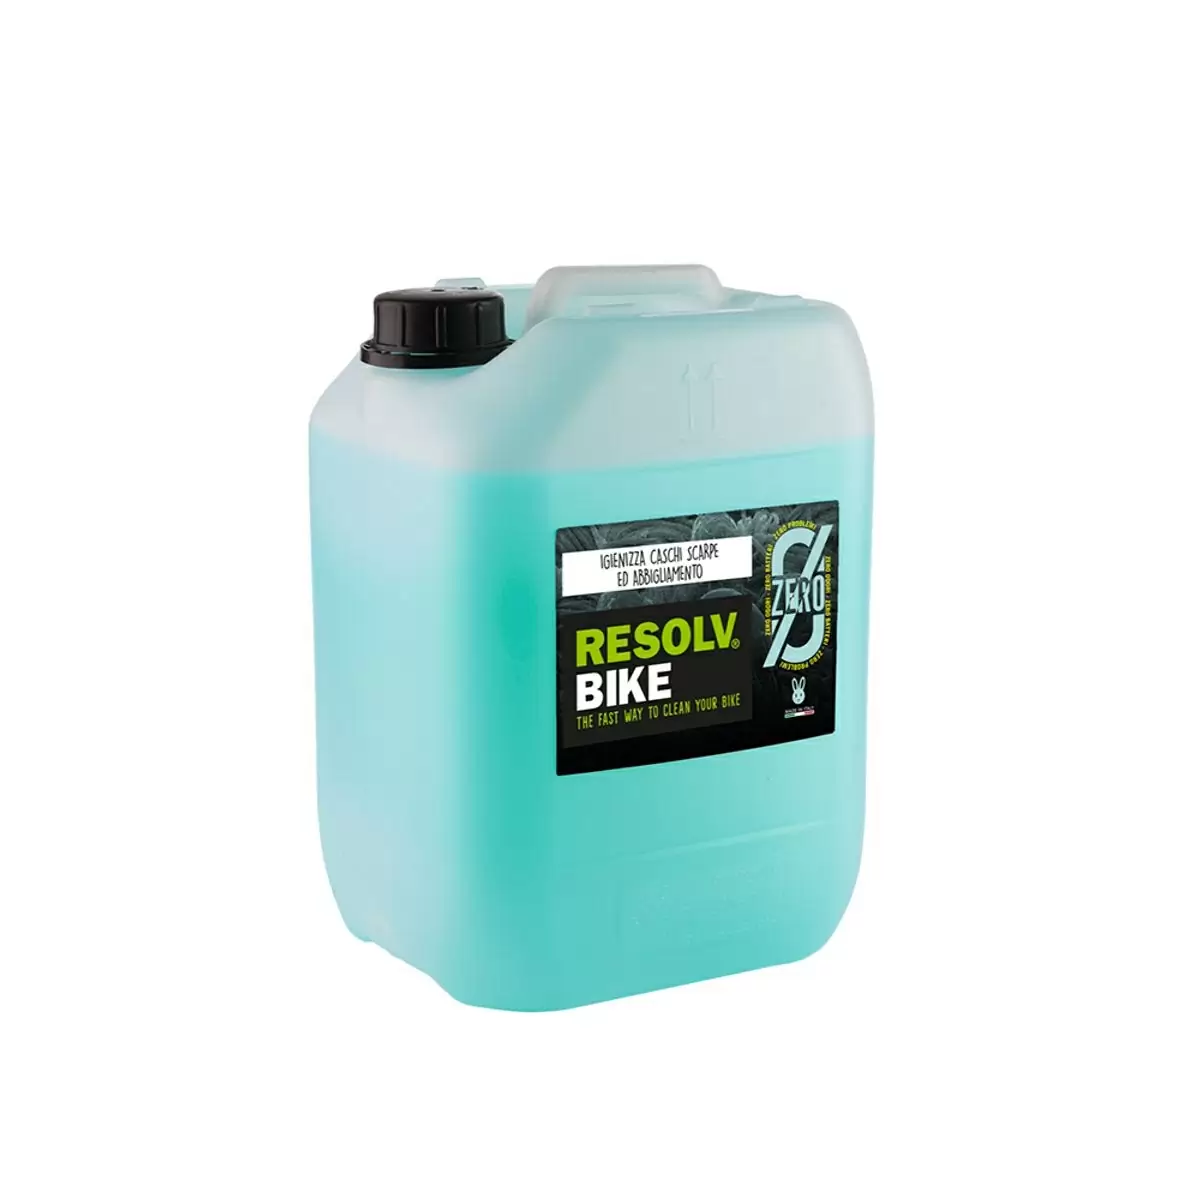 Spray Zero 100% Natural Sanitising Solution 5L - image